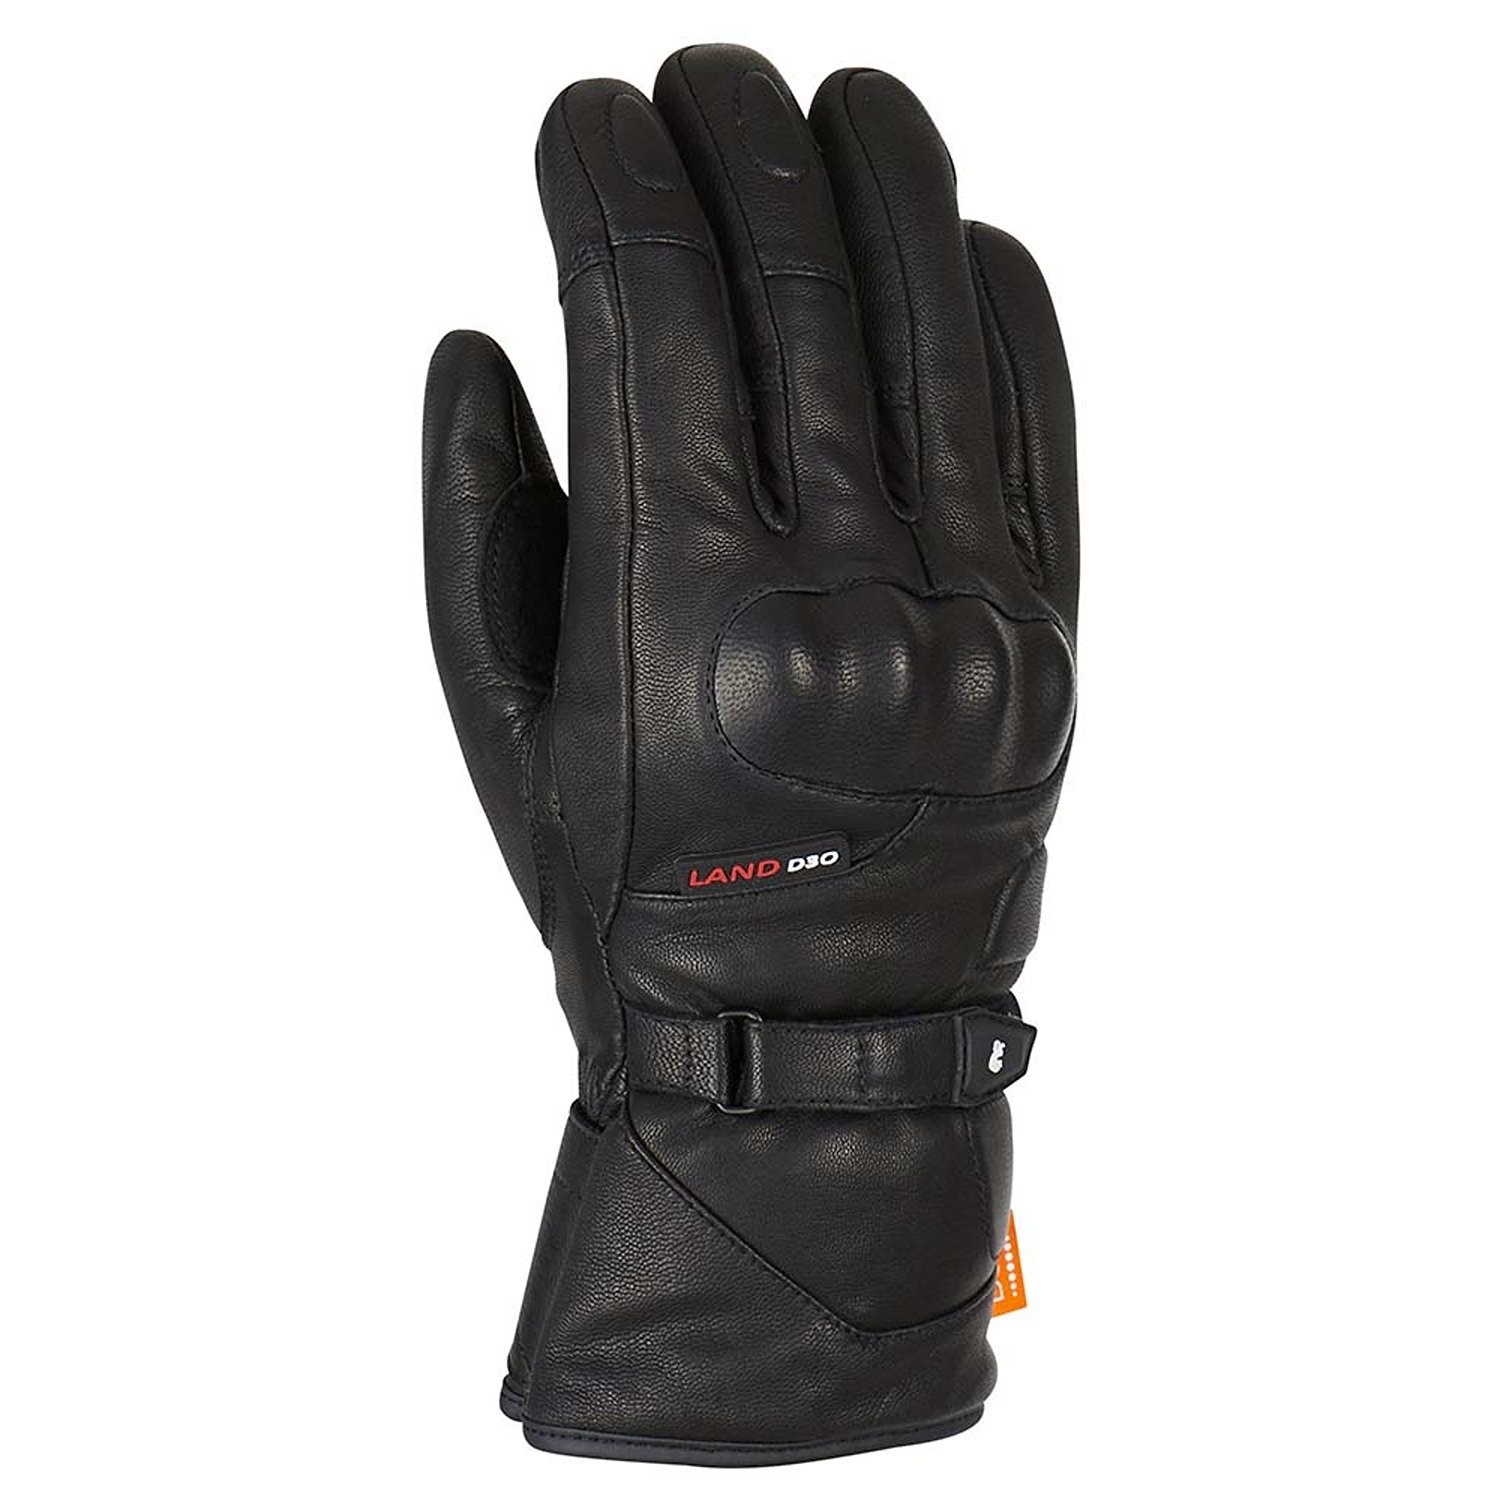 Image of Furygan Land DK D30 Gloves Black Size XL ID 3435980358570